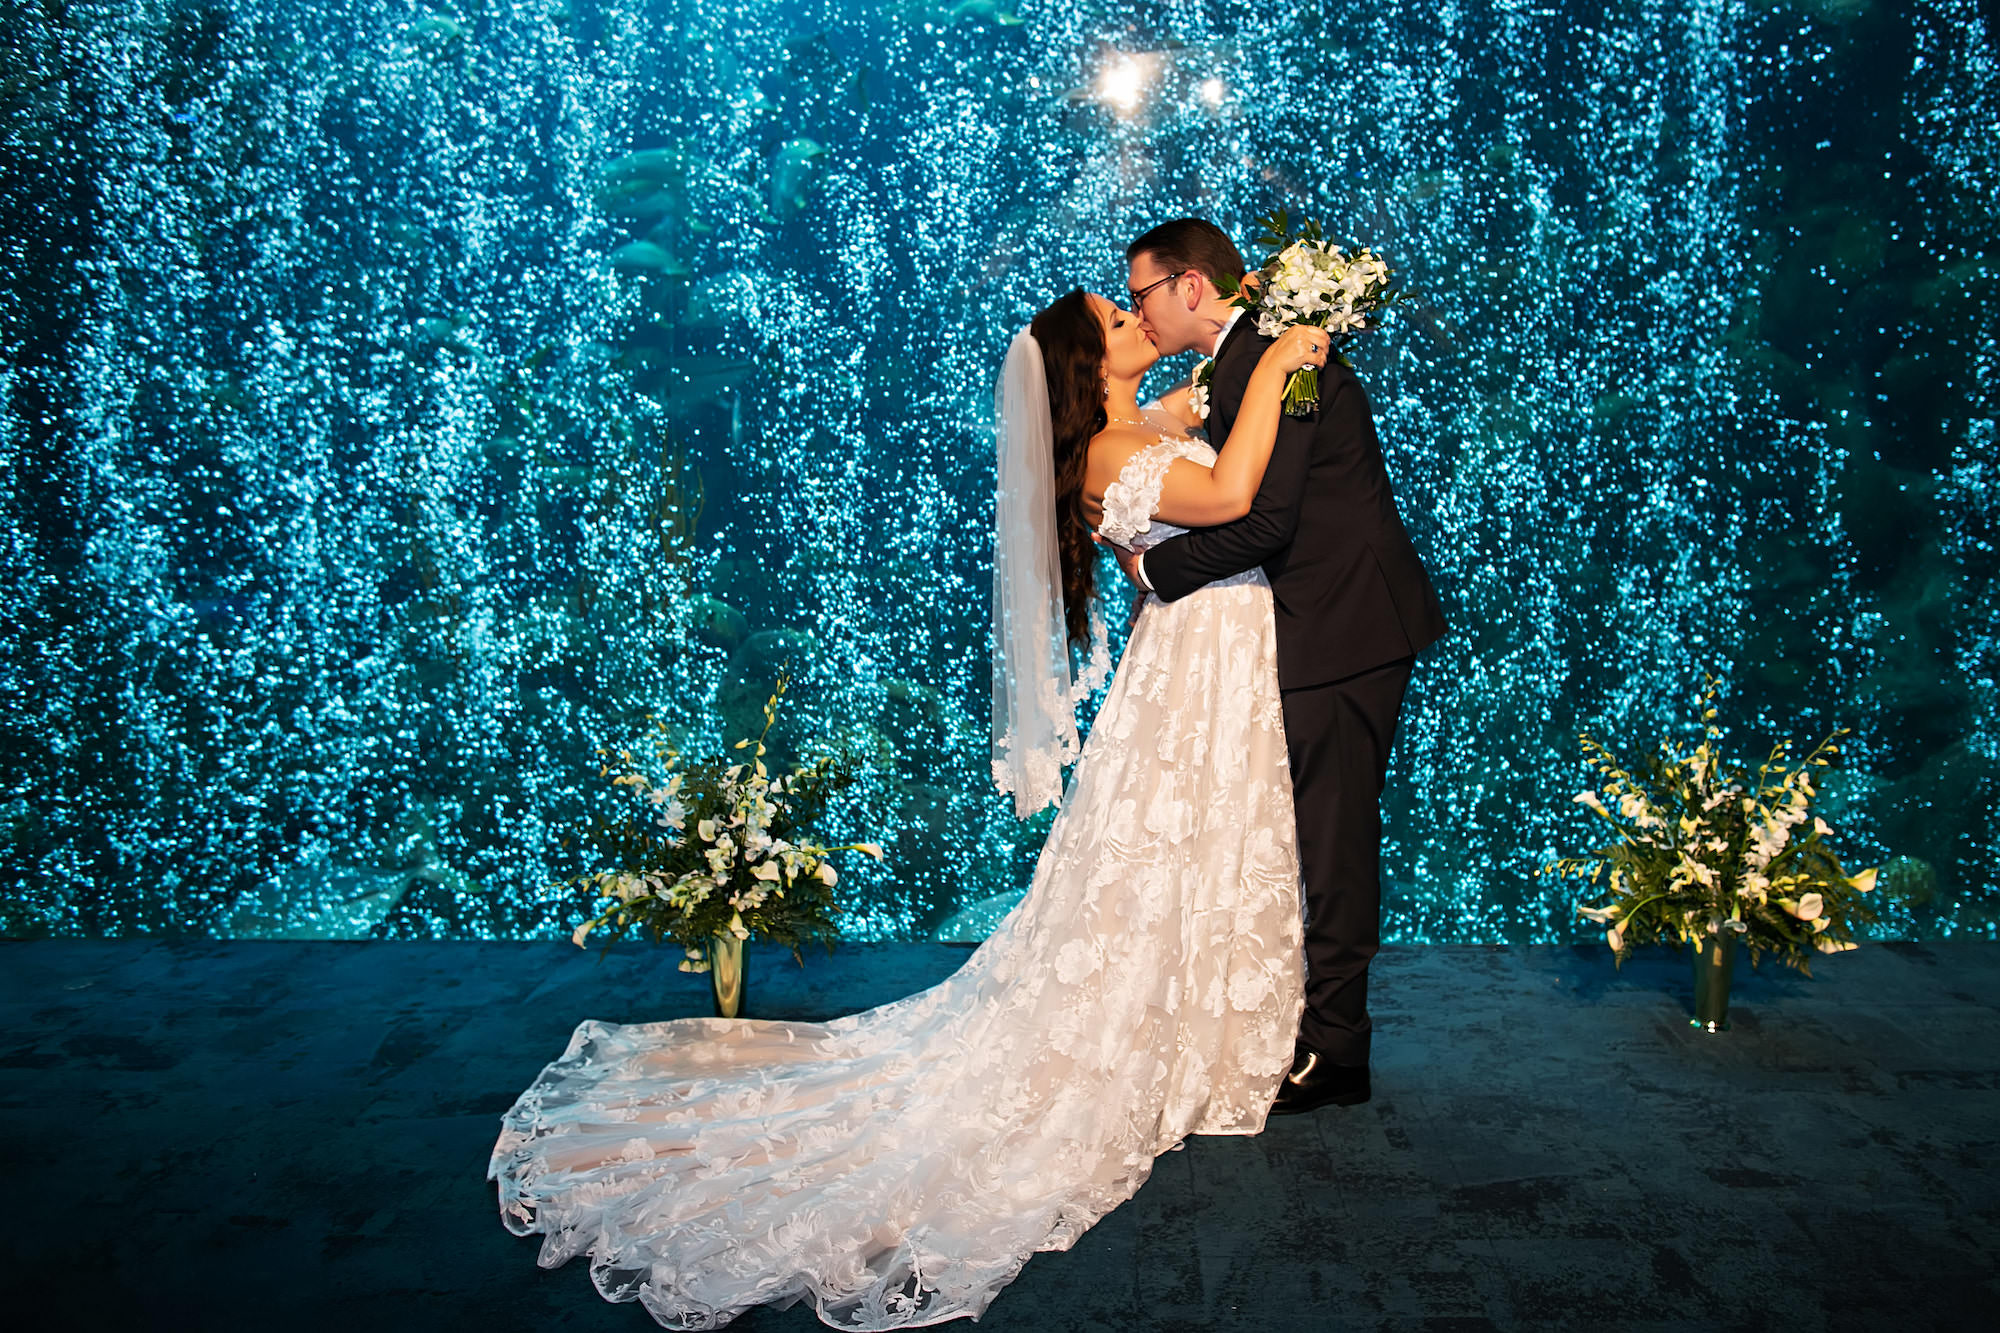 Bride and Groom First Kiss | Tampa Florida Aquarium Indoor Wedding | Tampa Florida Photographer Limelight Photography